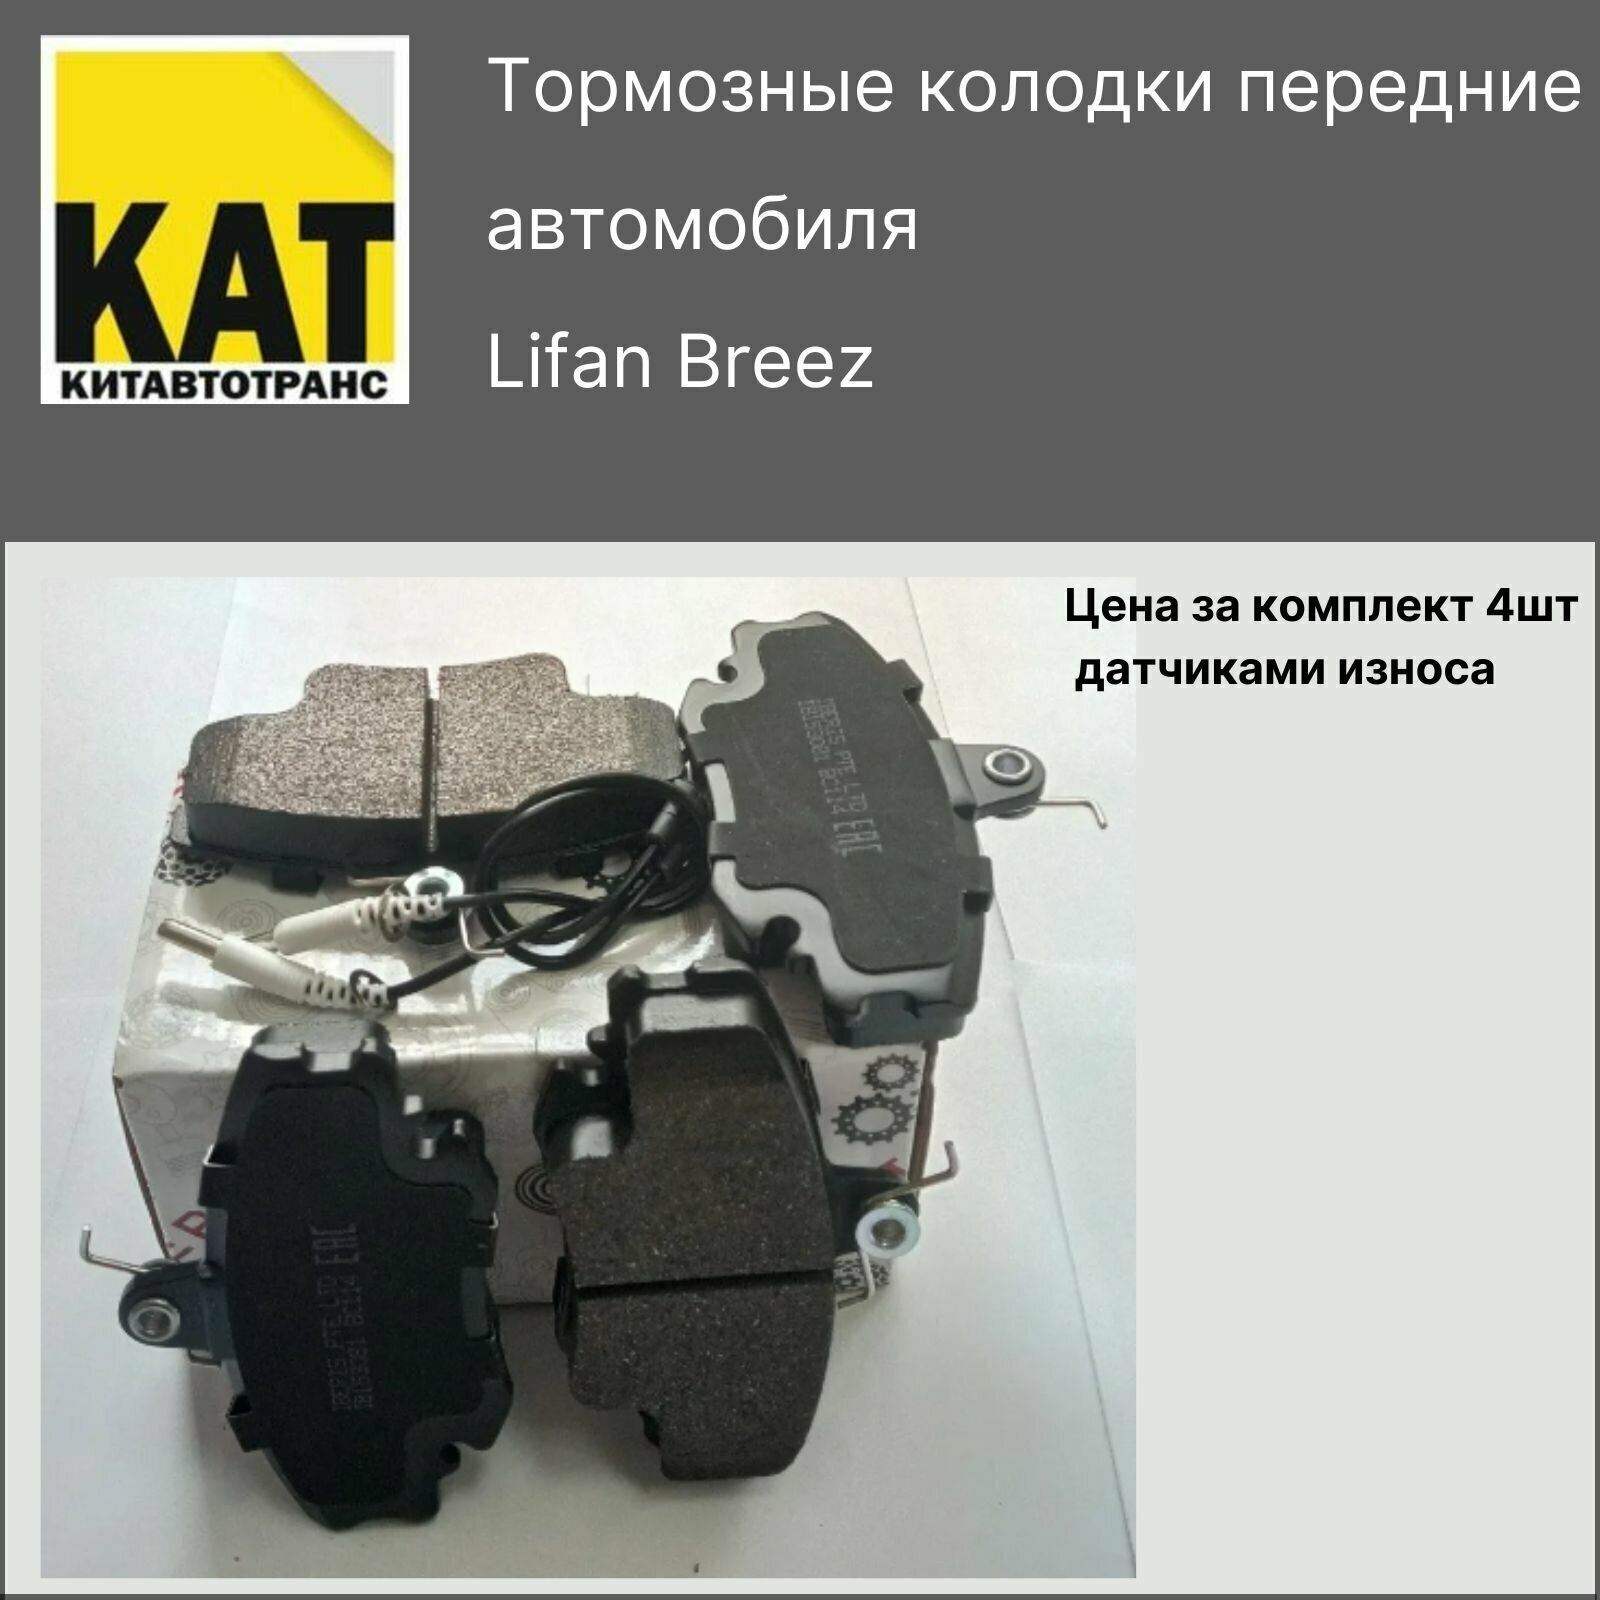 Комплект передних тормозных колодок для автомобиля LIFAN BREEZ IBERIS (C датчиками)